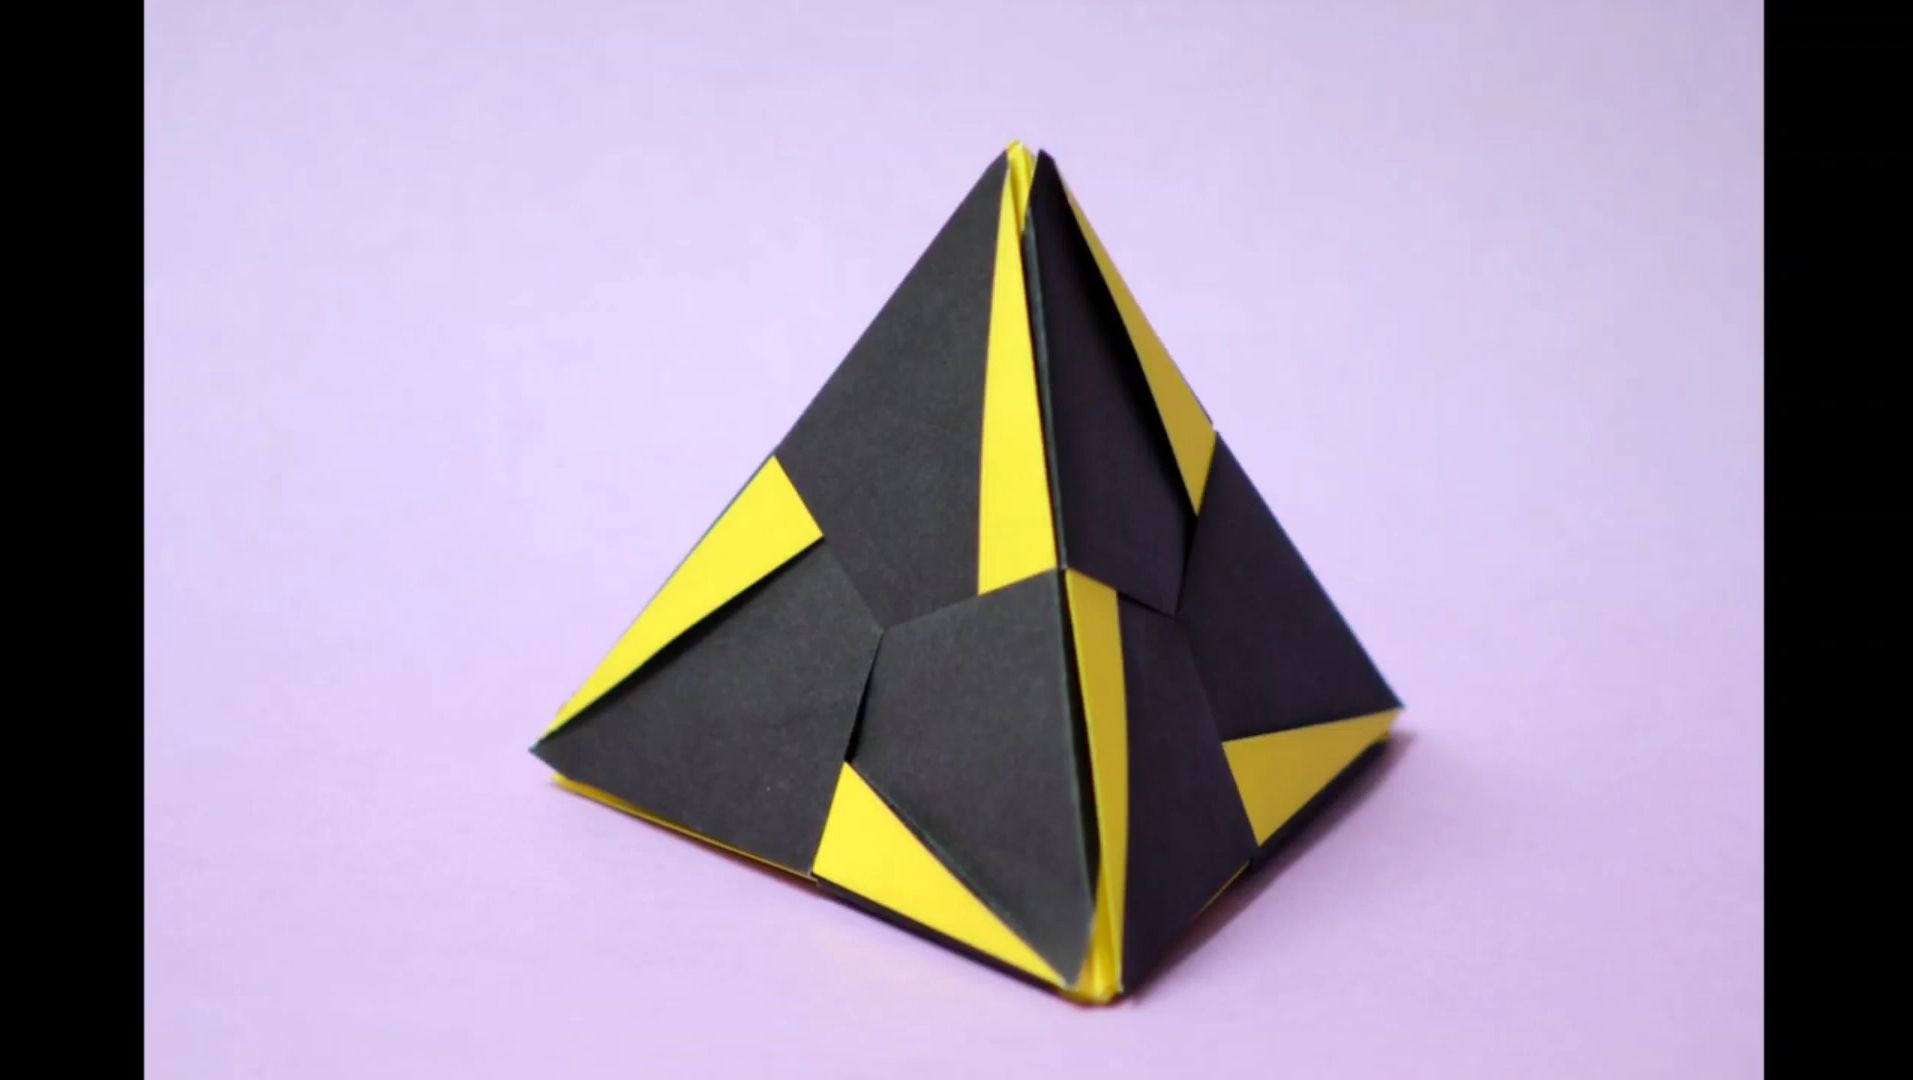 【jaime ni09o bernal】正多面体变化折纸花球制作教程